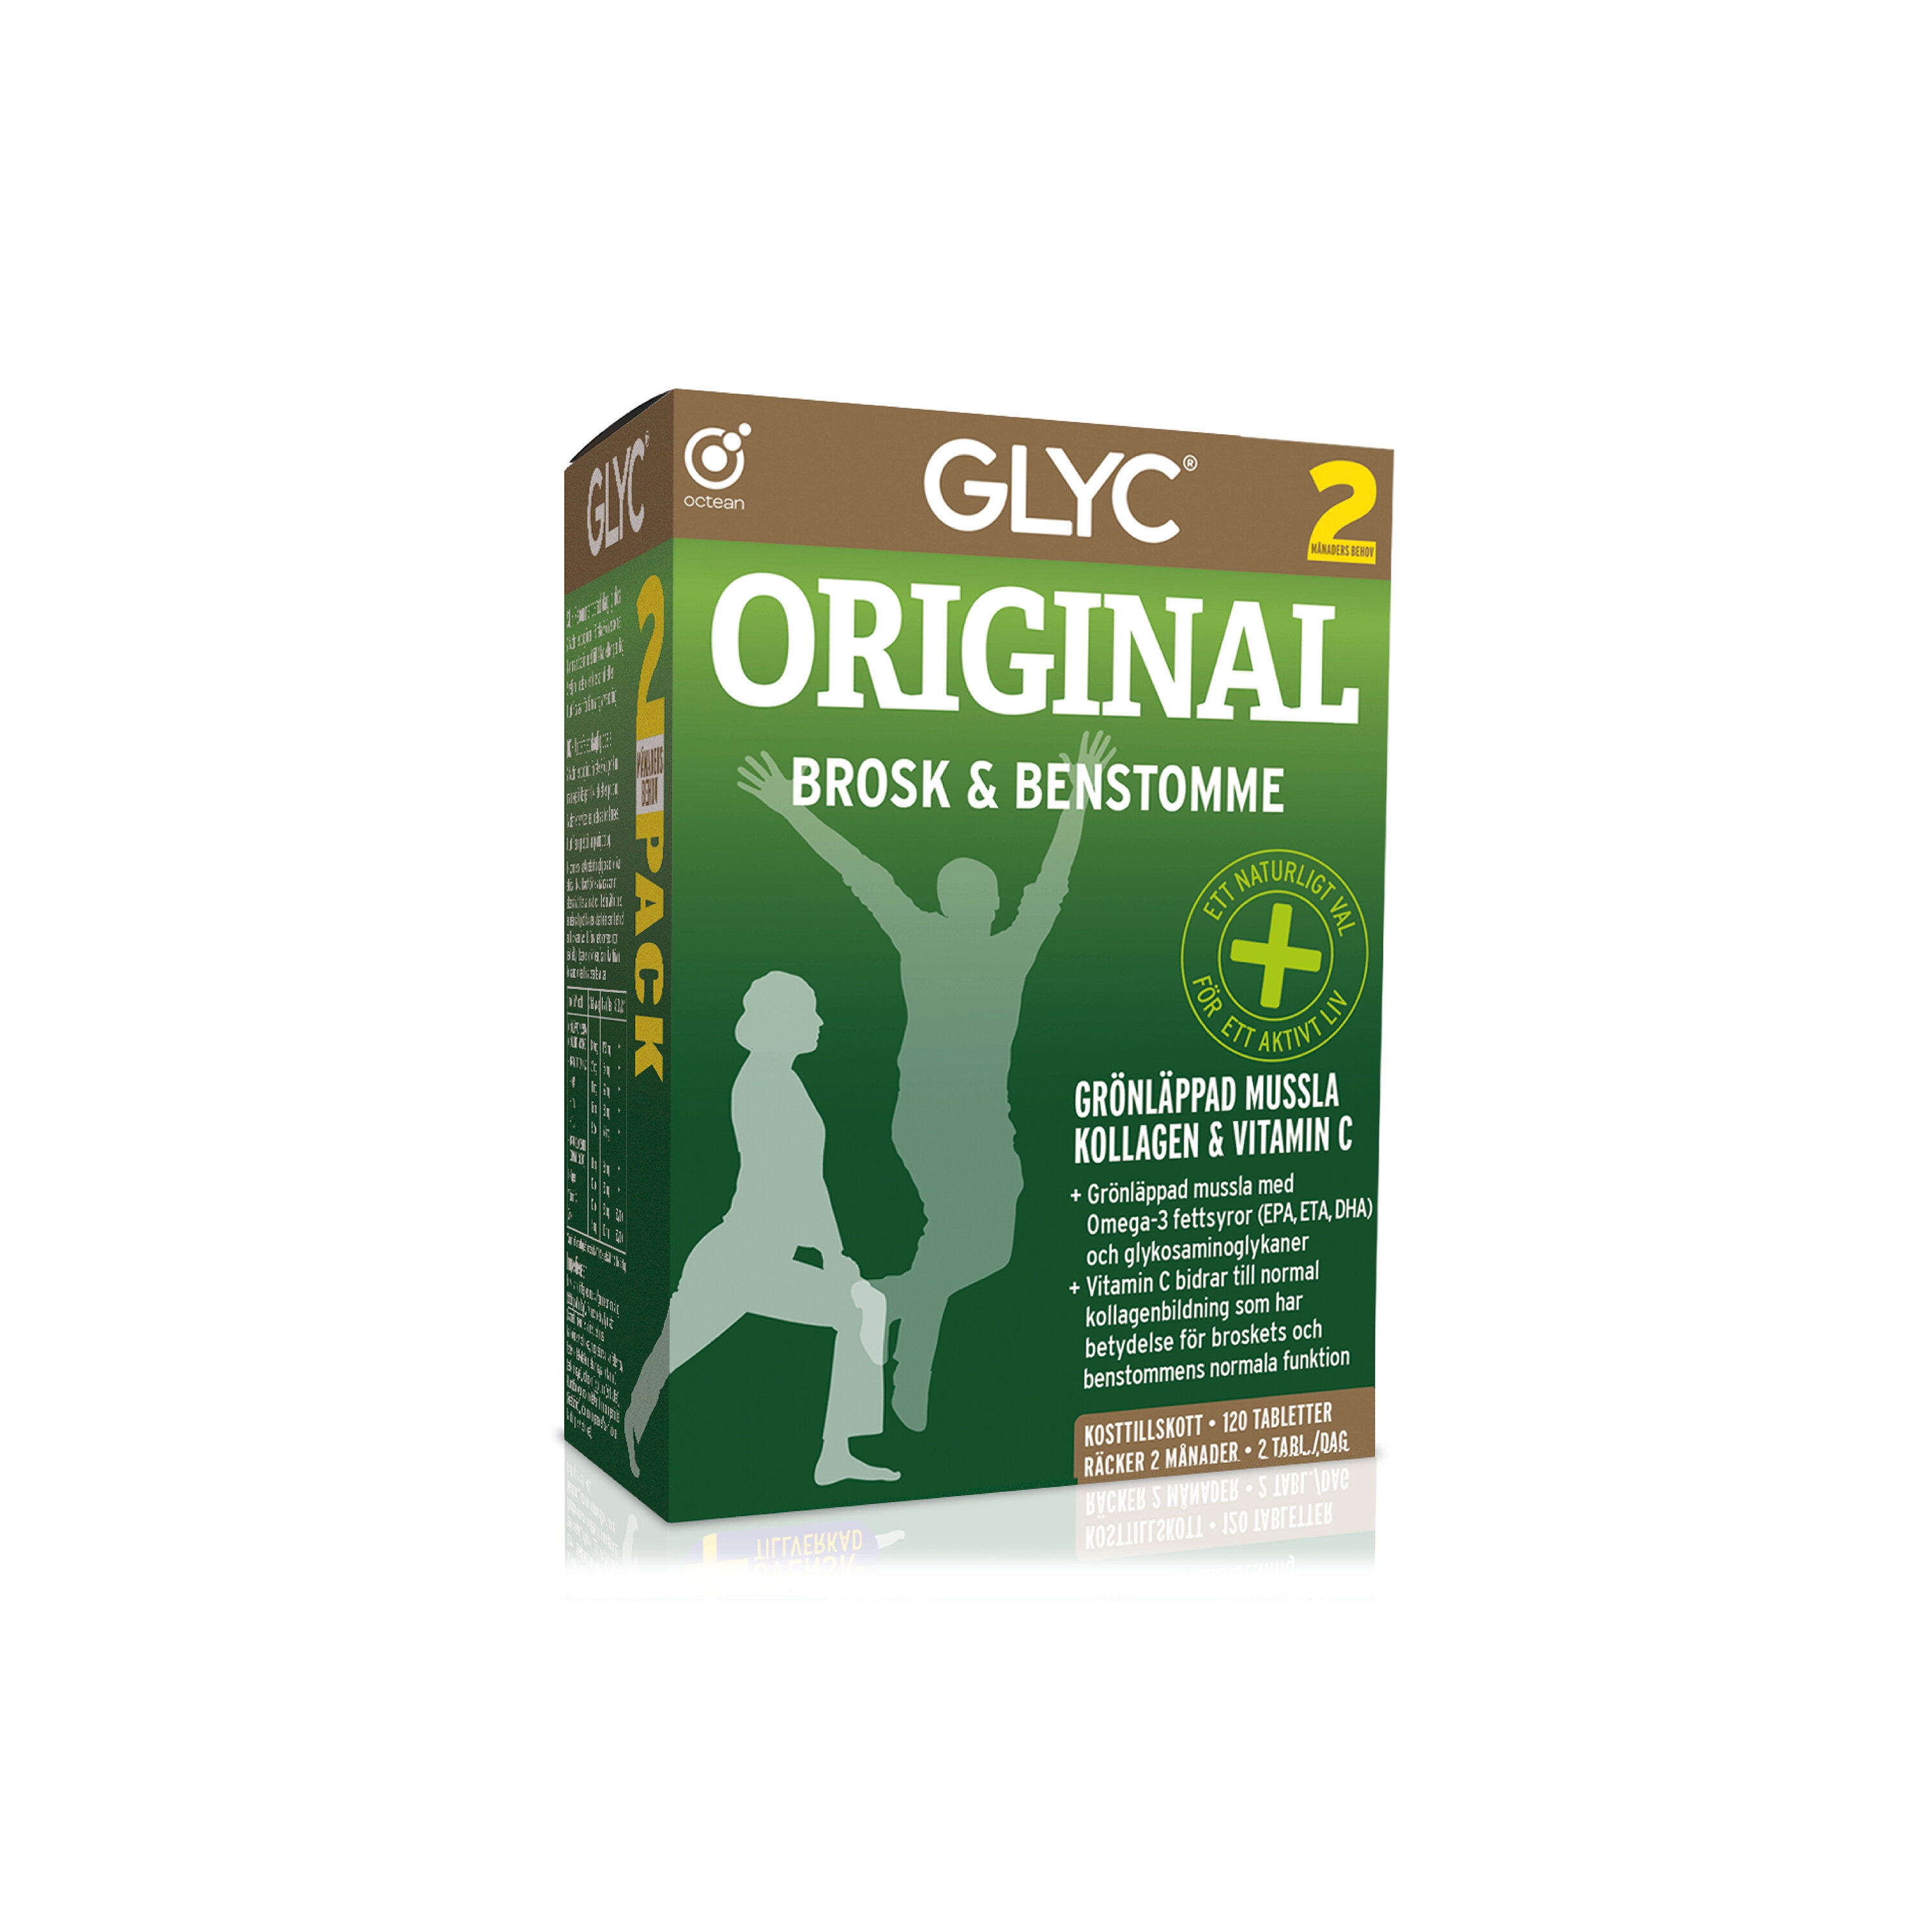 Glyc Original 120t